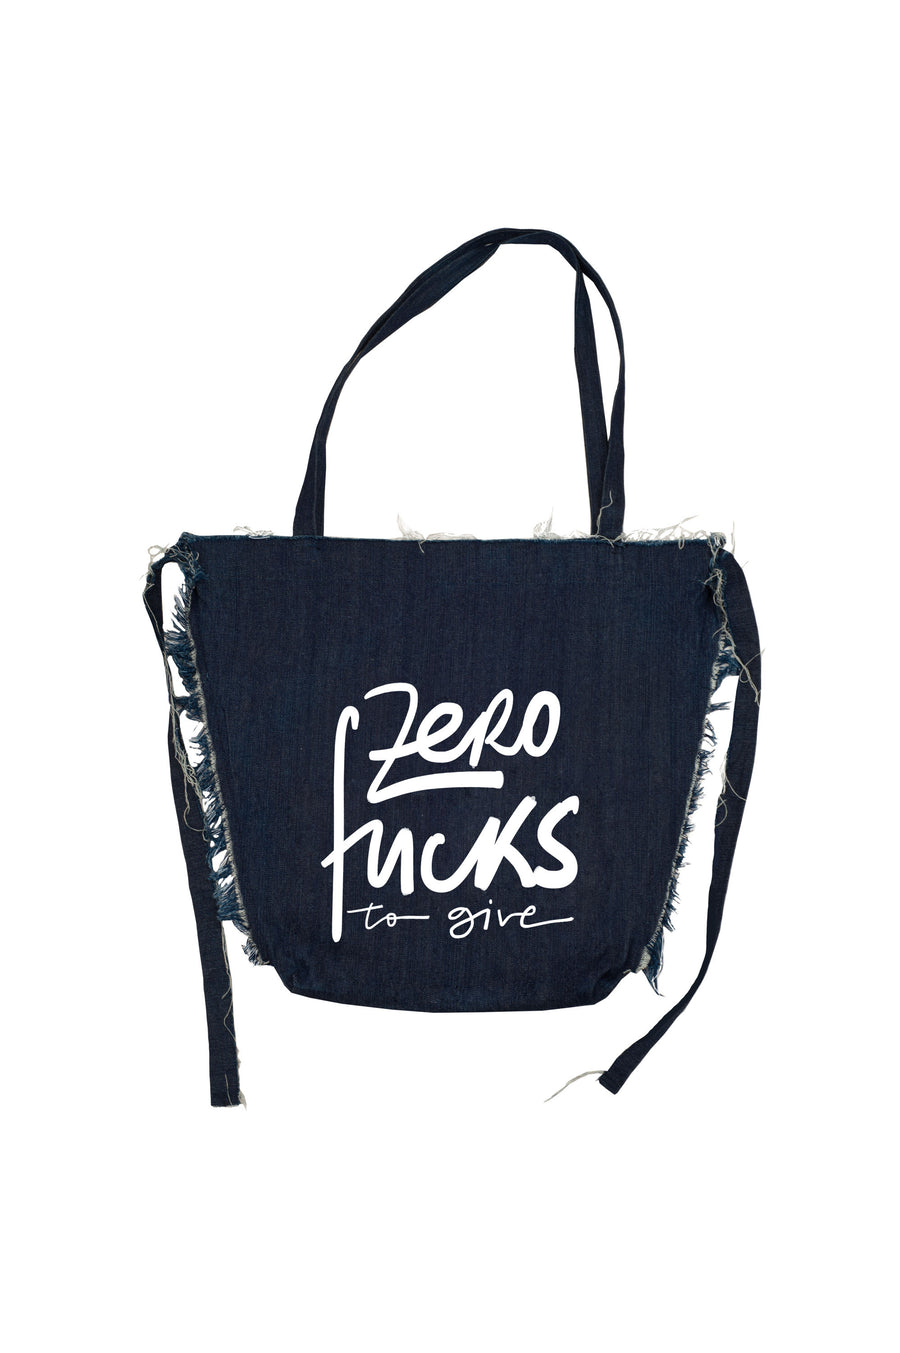 ZERO FUCKS TO GIVE tote bag